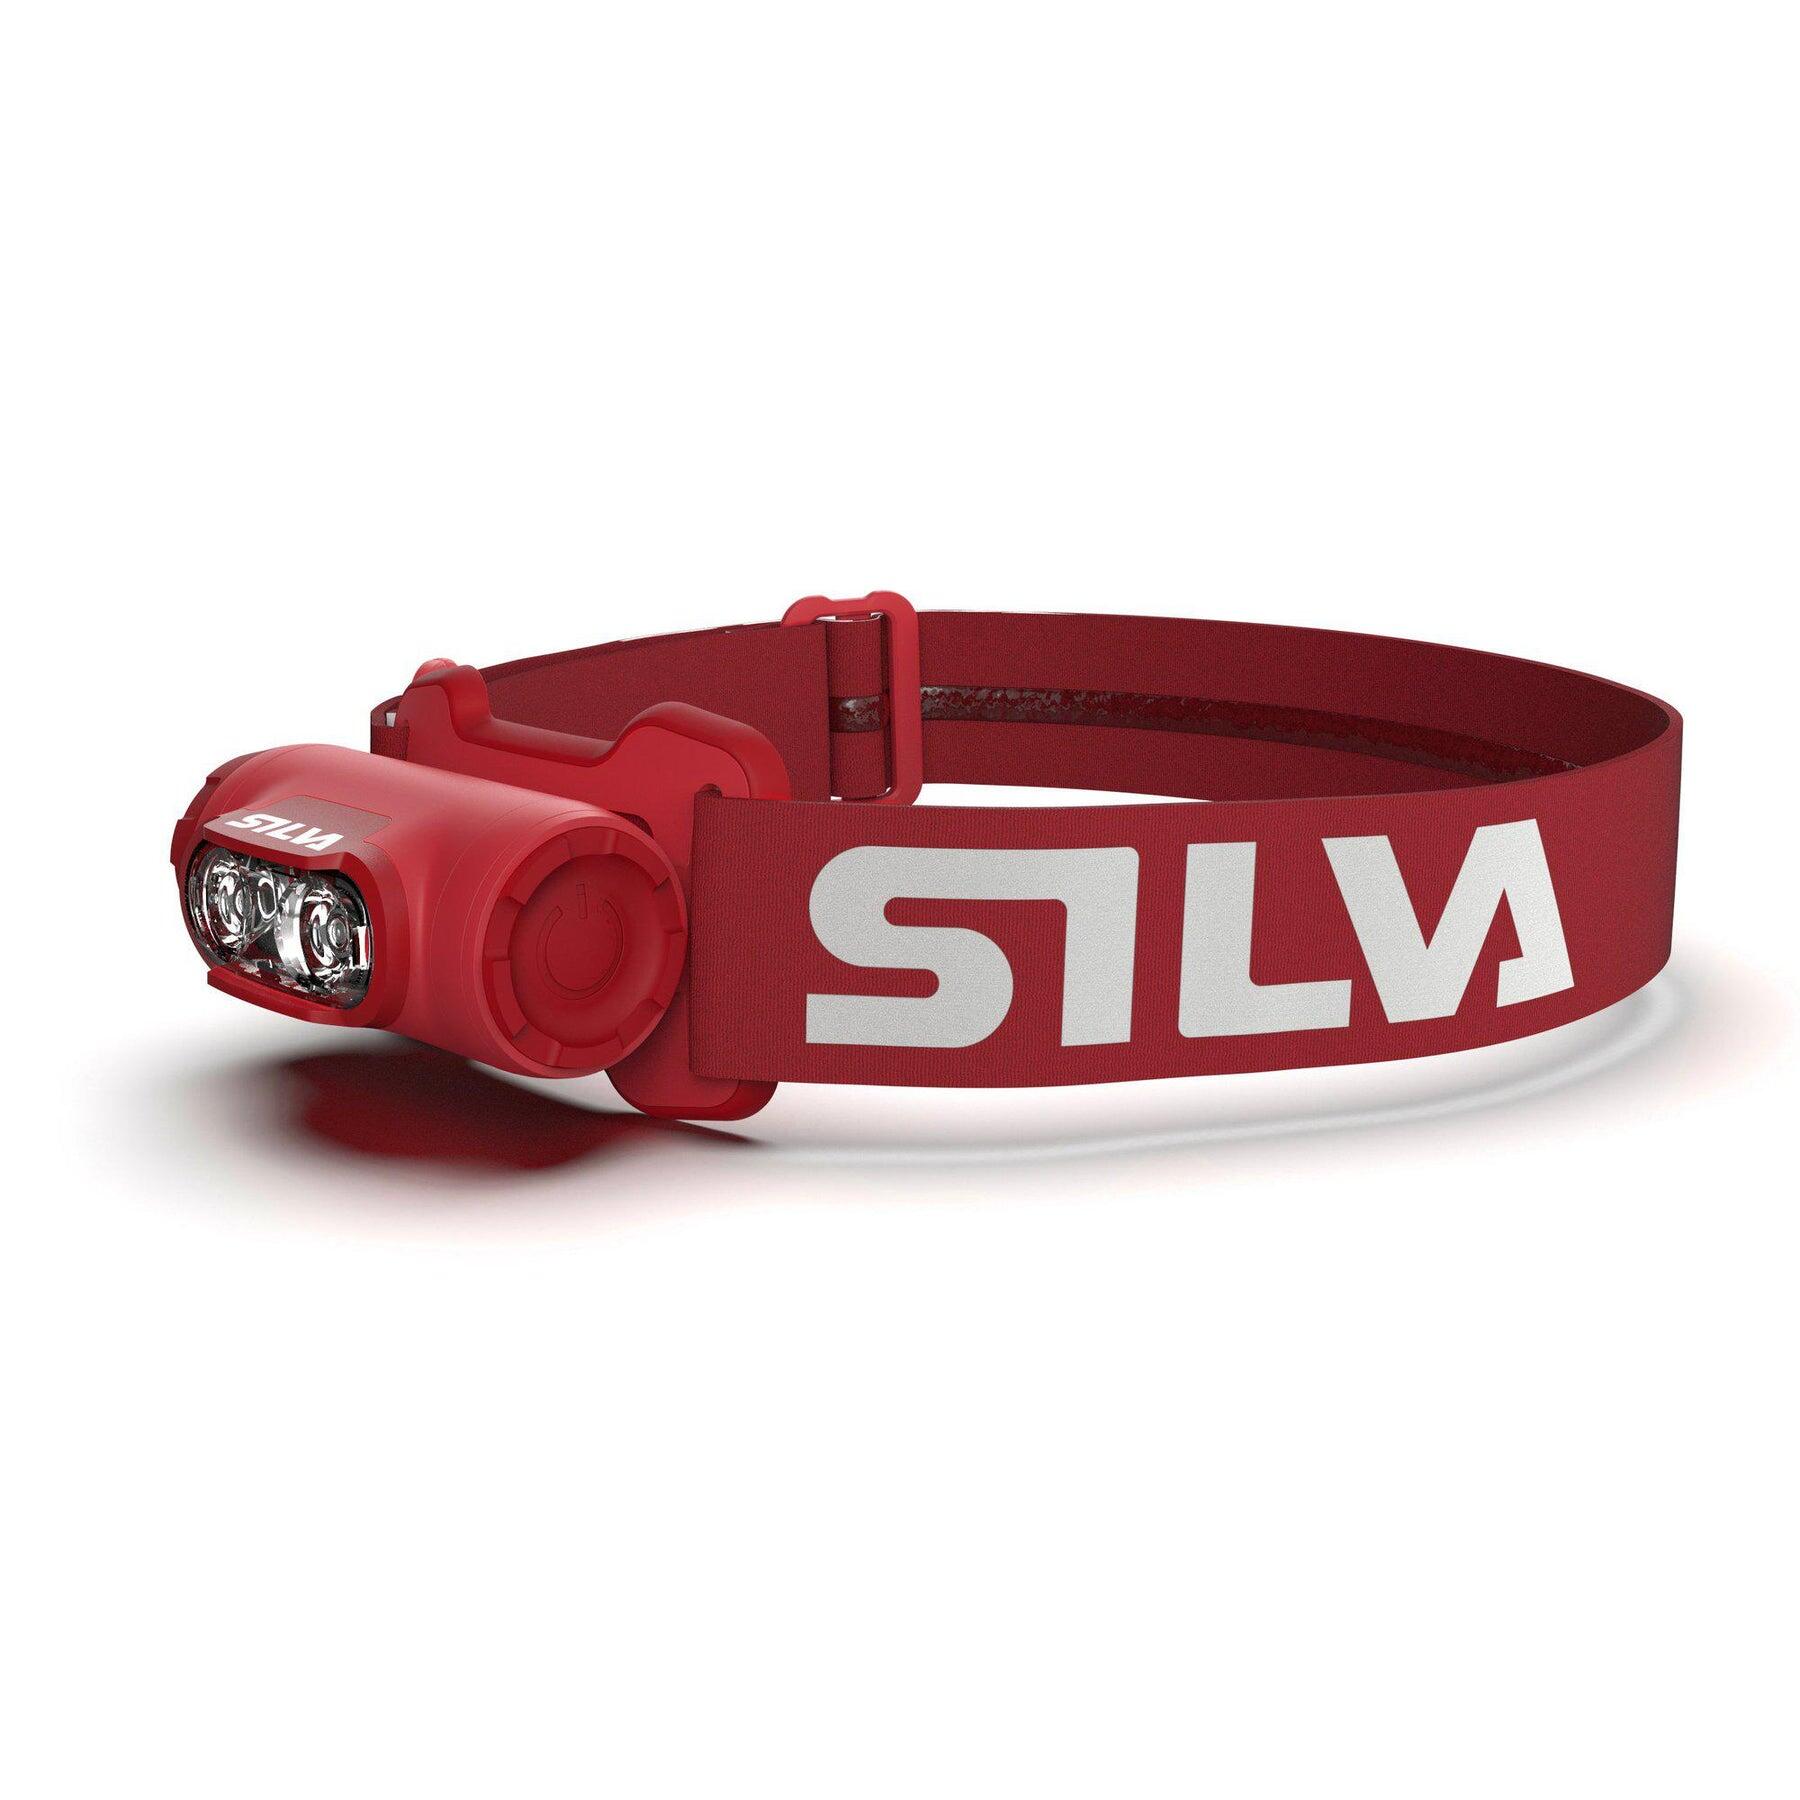 SILVA Silva Explore 4 Headtorch Light Headlamp [Red]